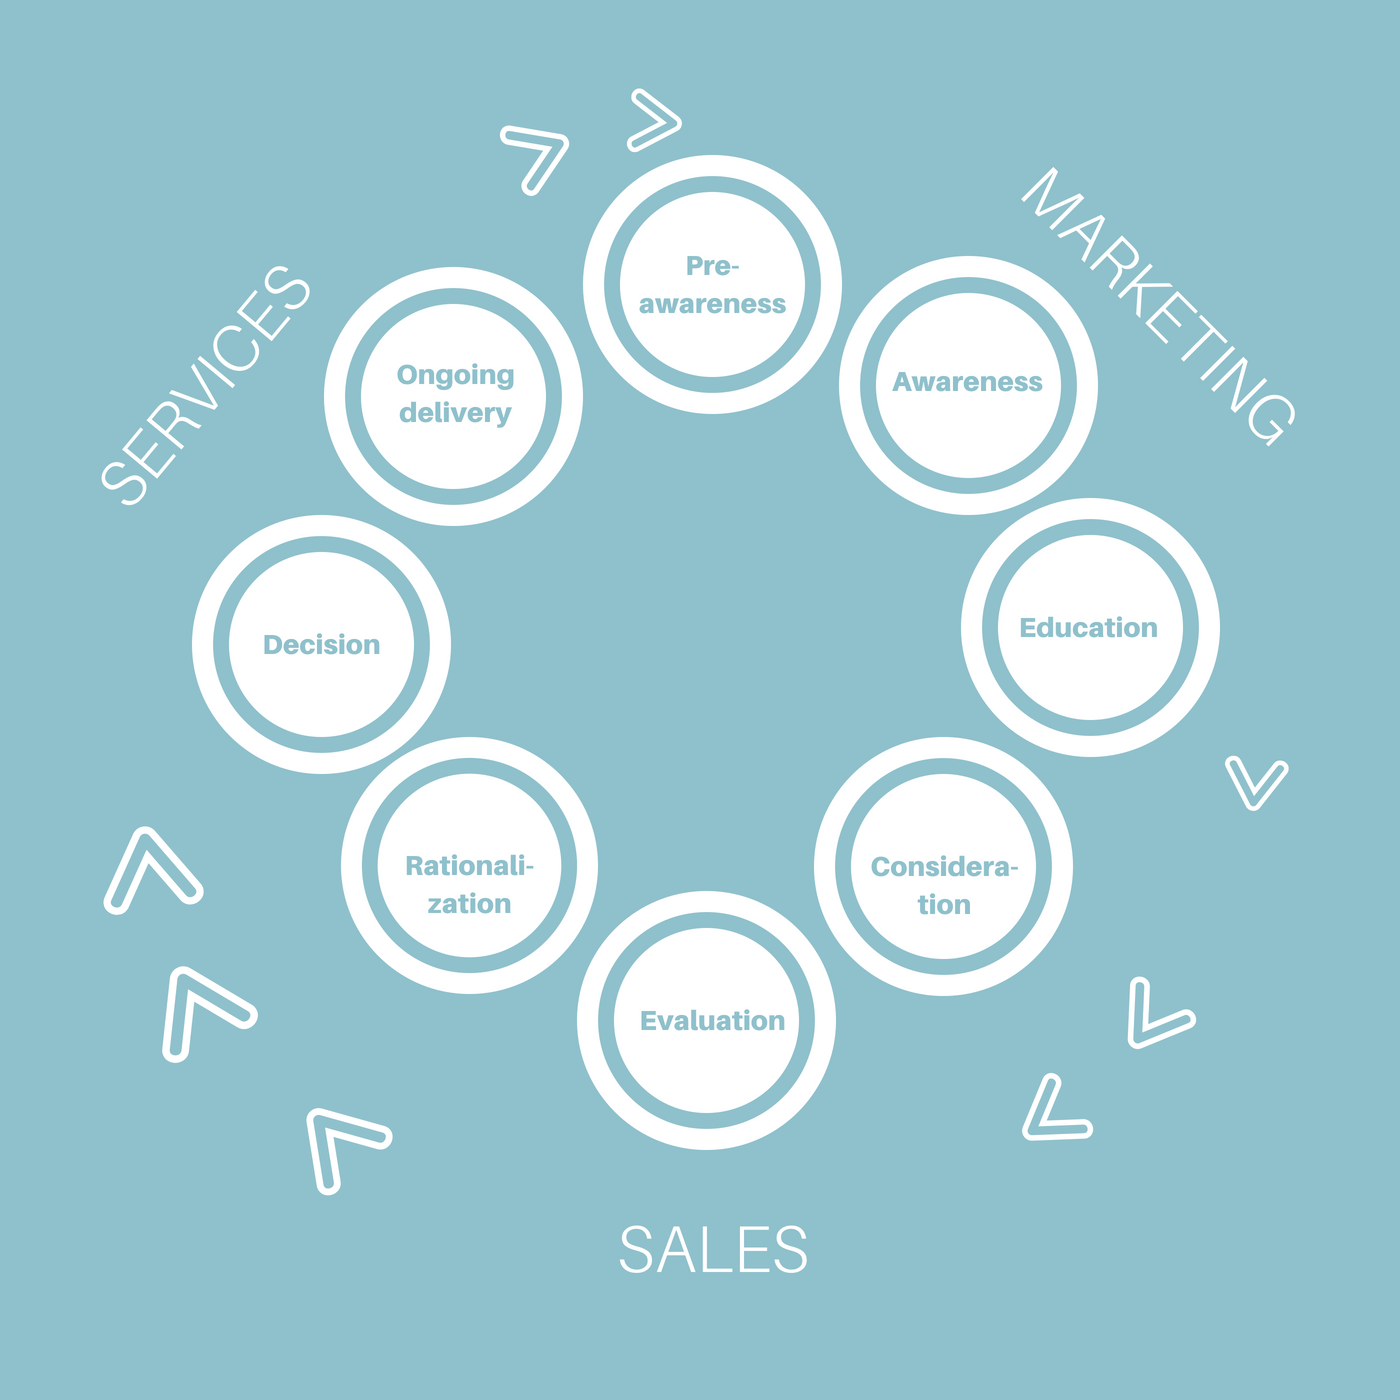 Den nye salgssyklusen (2) (1)